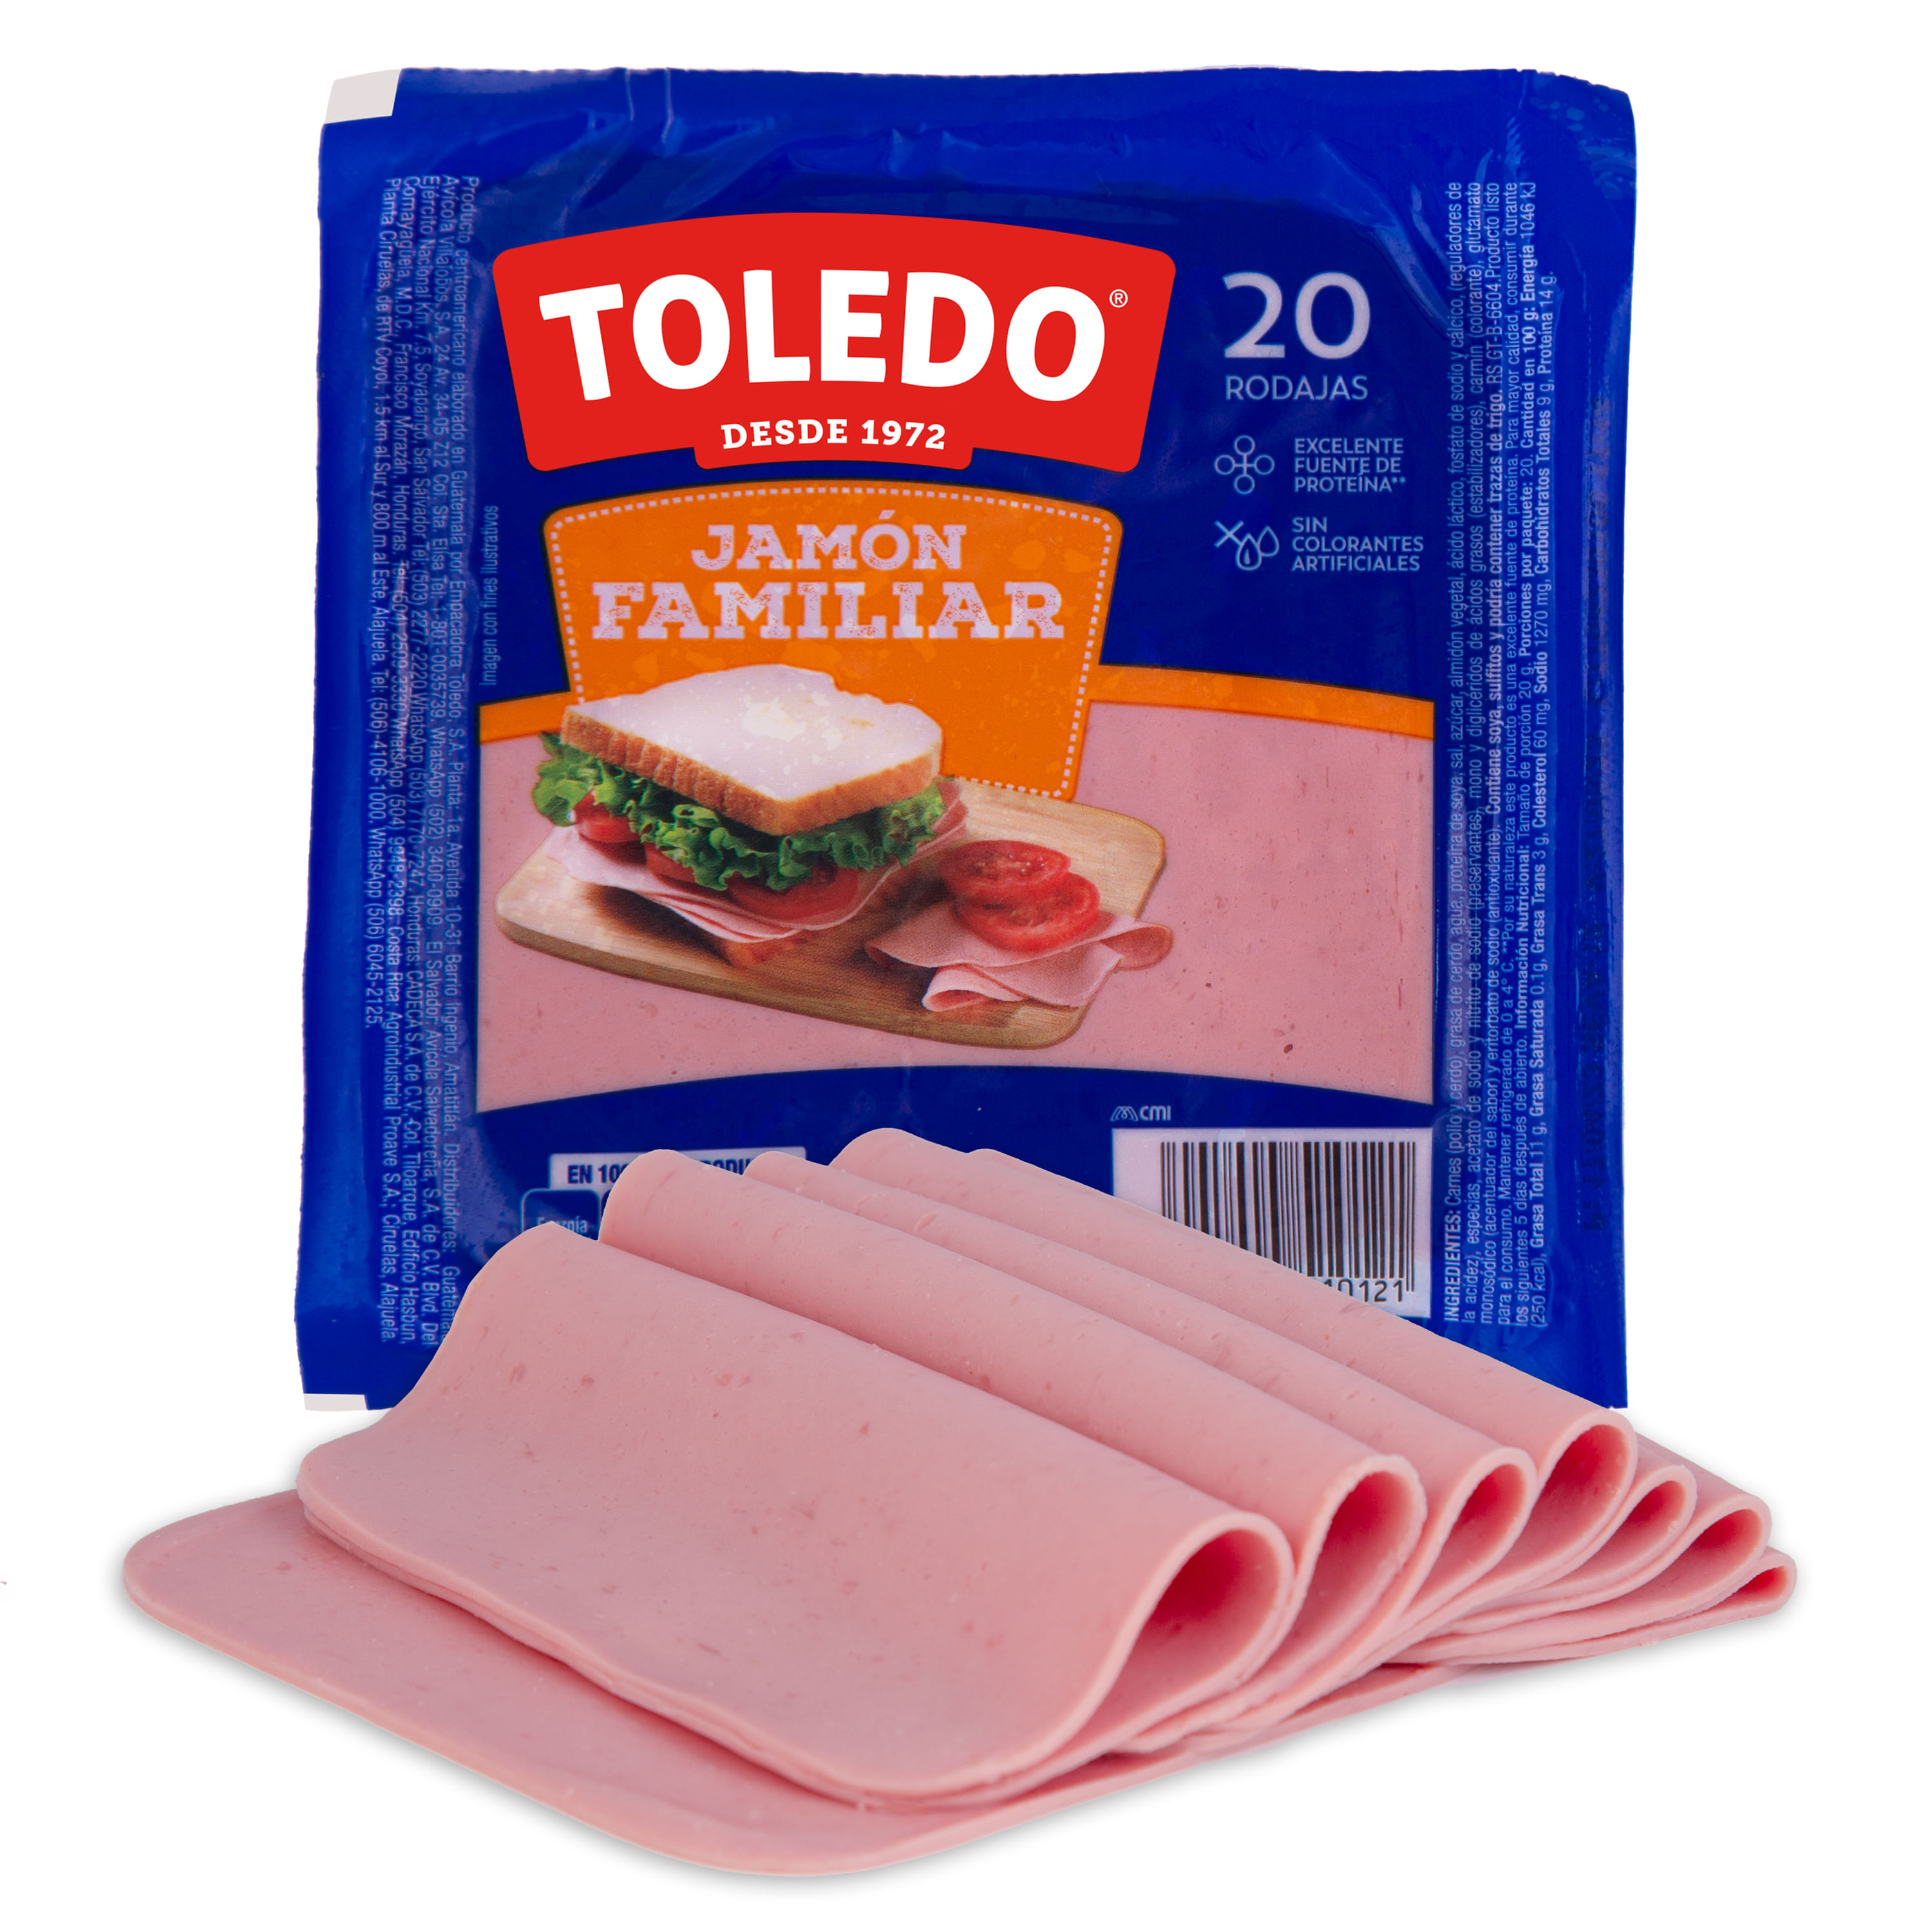 Jamon-Familiar-marca-Toledo-400g-1-27081